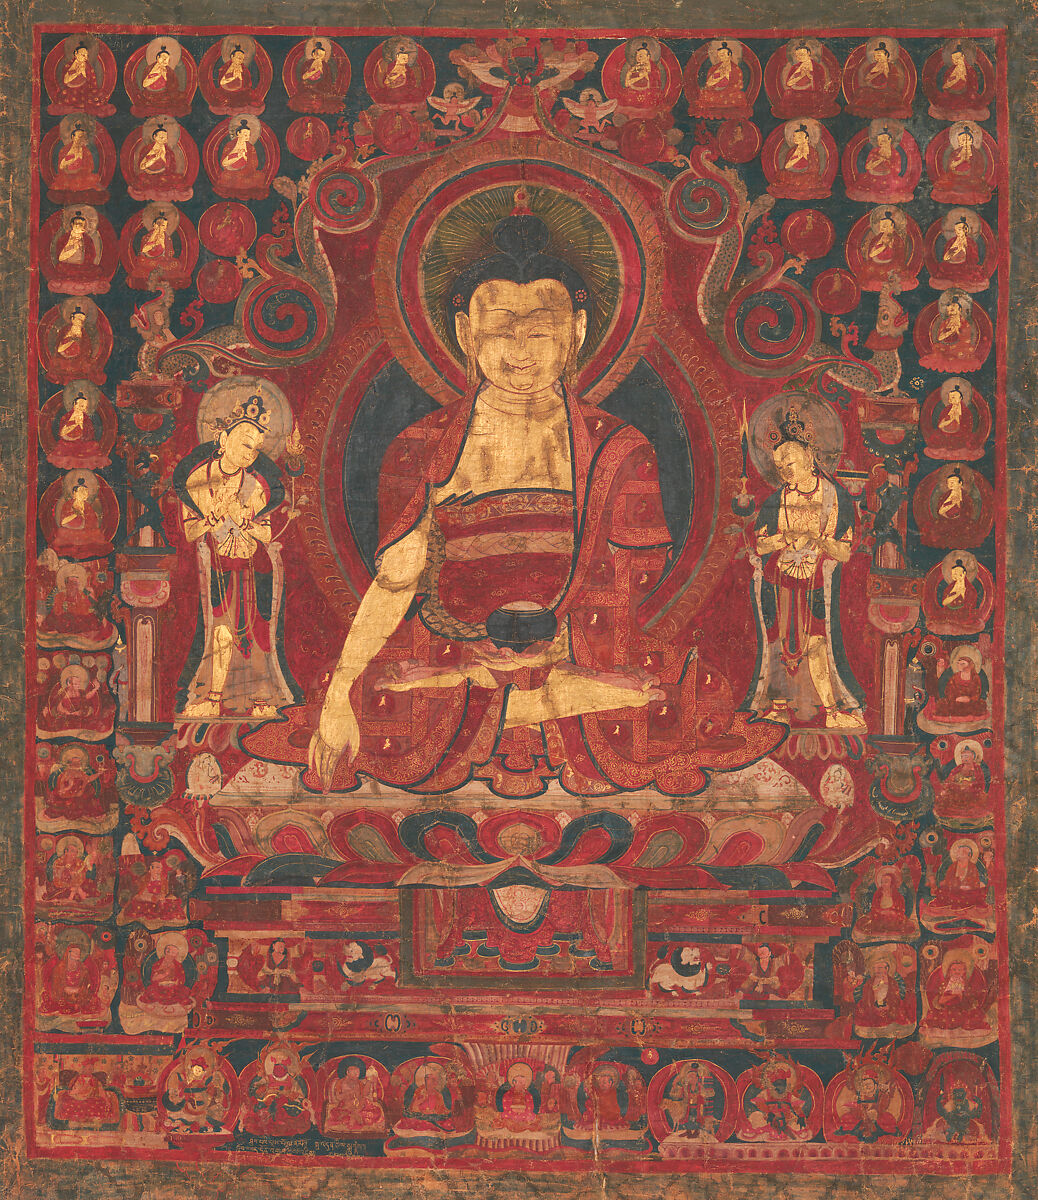 Buddha Shakyamuni as "Lord of the Munis", Distemper on cloth, Western Tibet (Guge) 